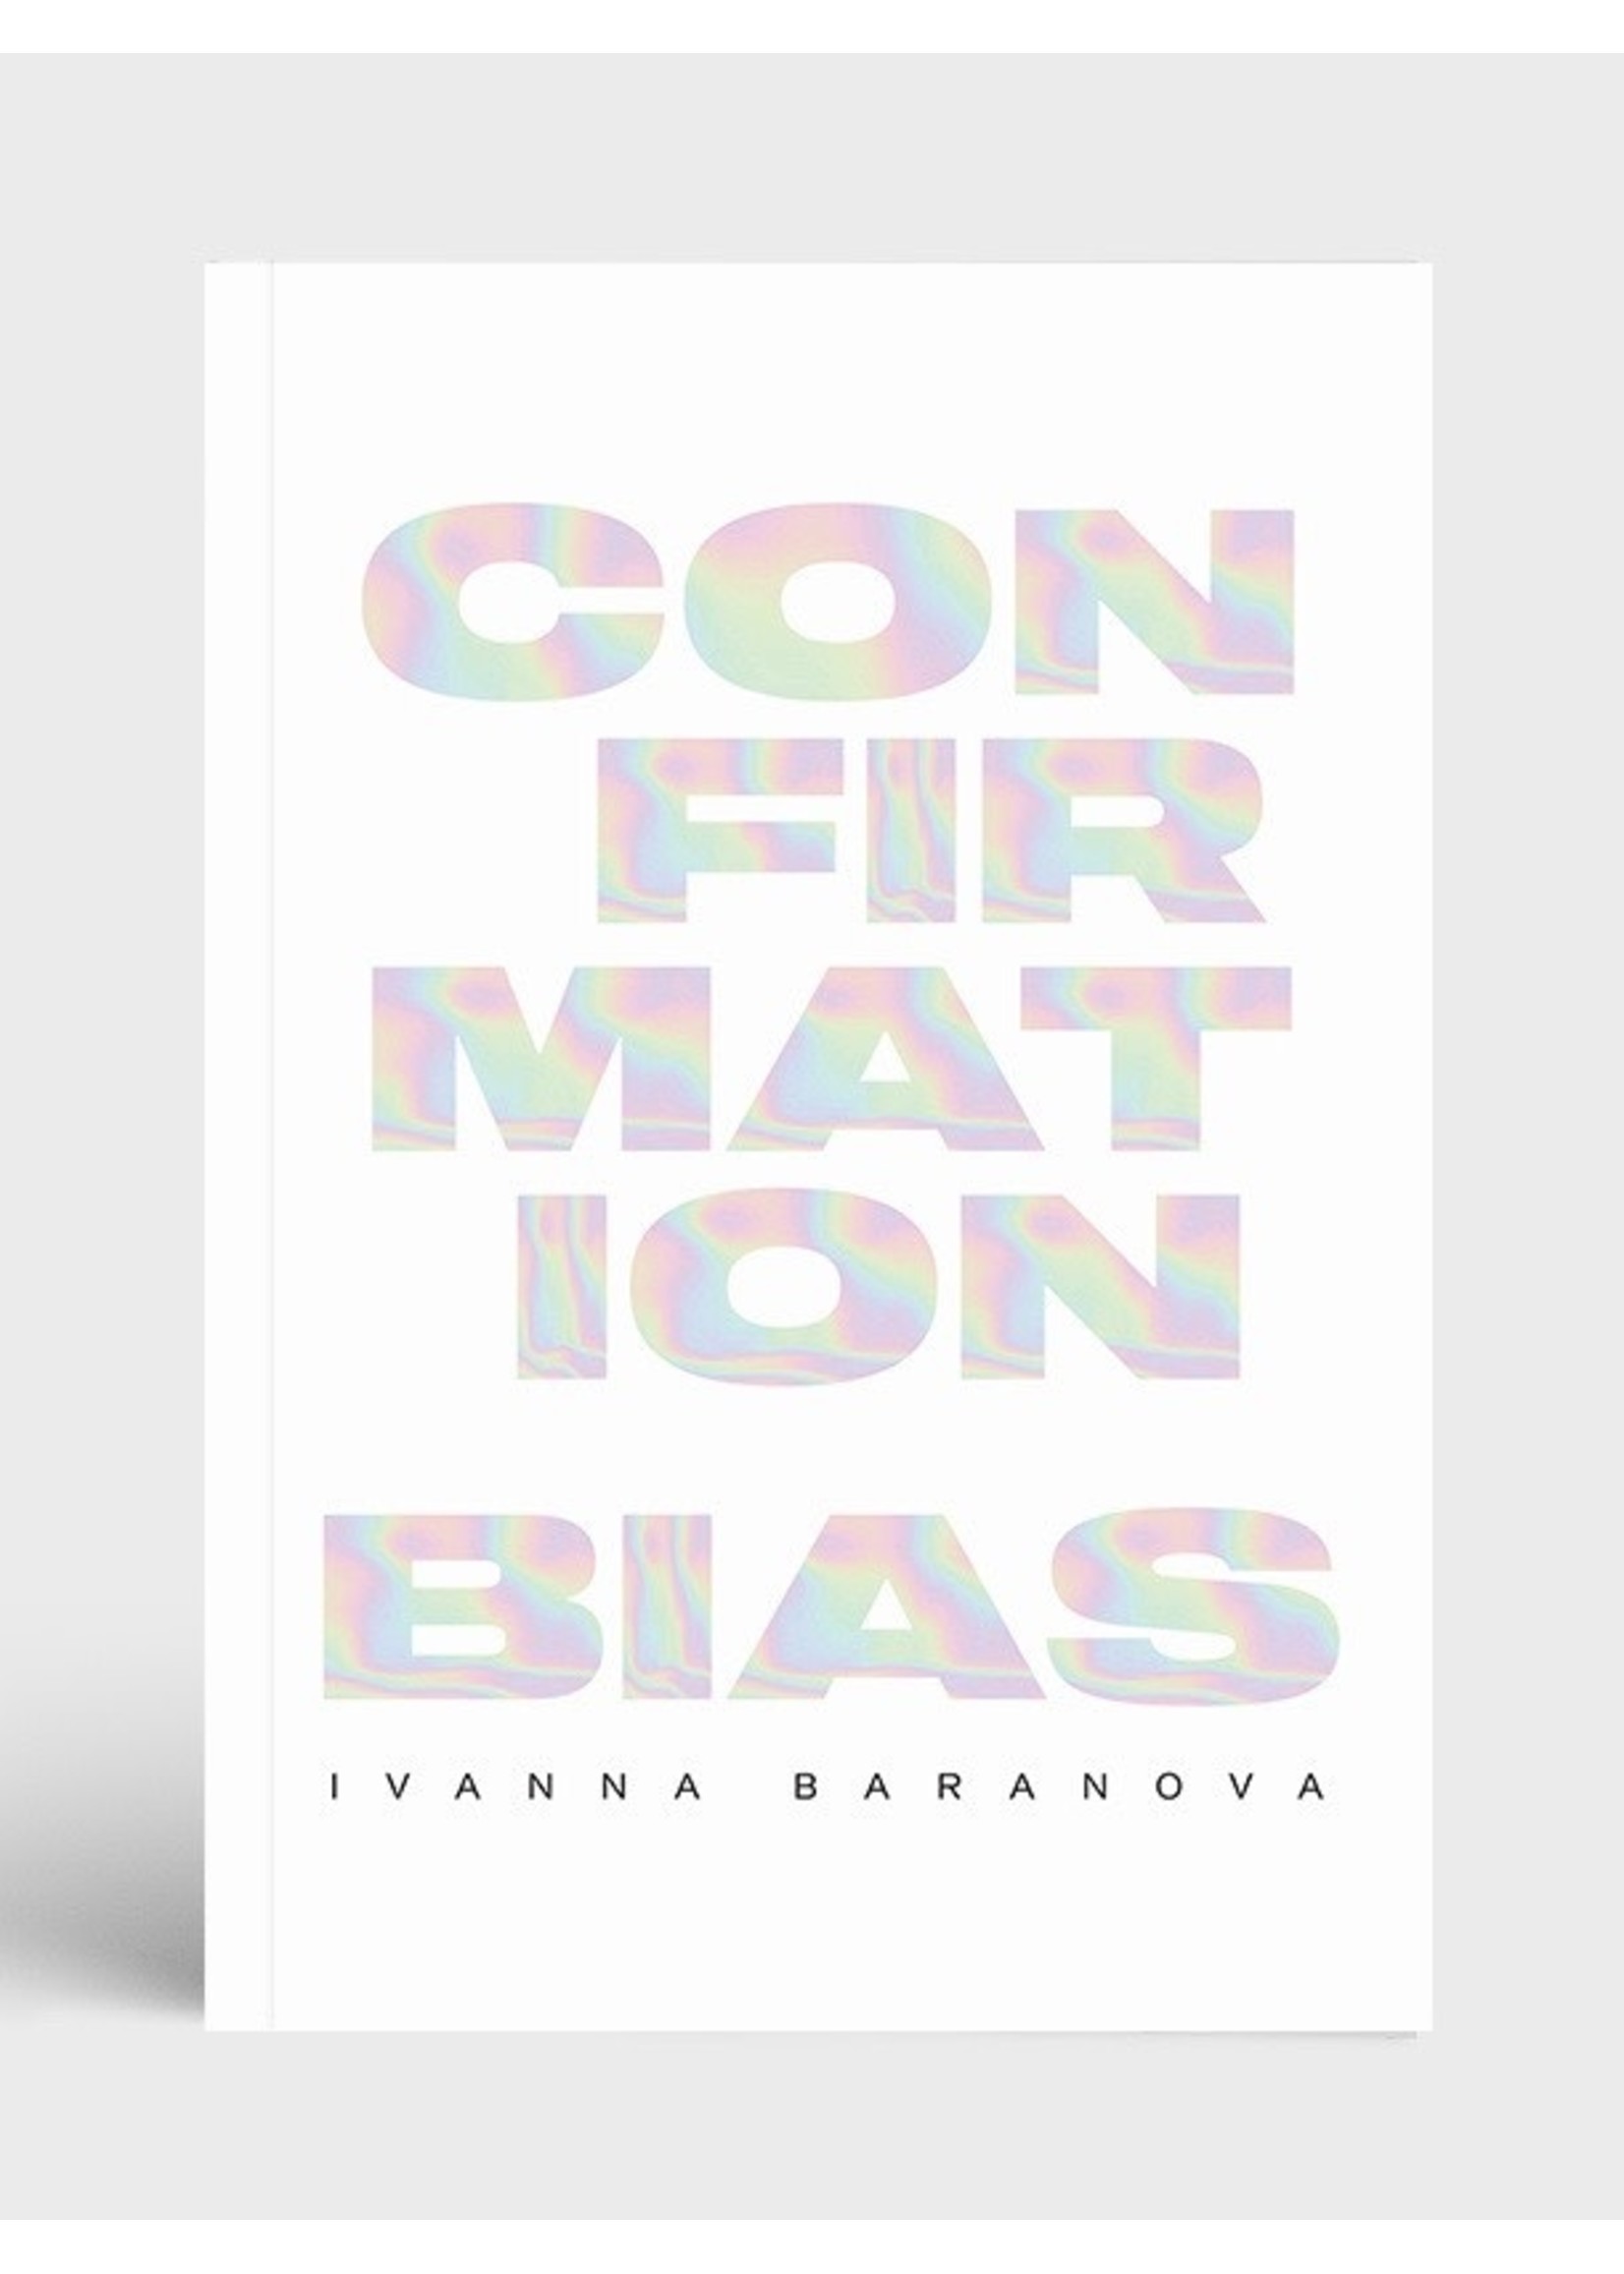 Metatron Press "CONFIRMATION BIAS" by Ivanna Baranova, published by Metatron Press